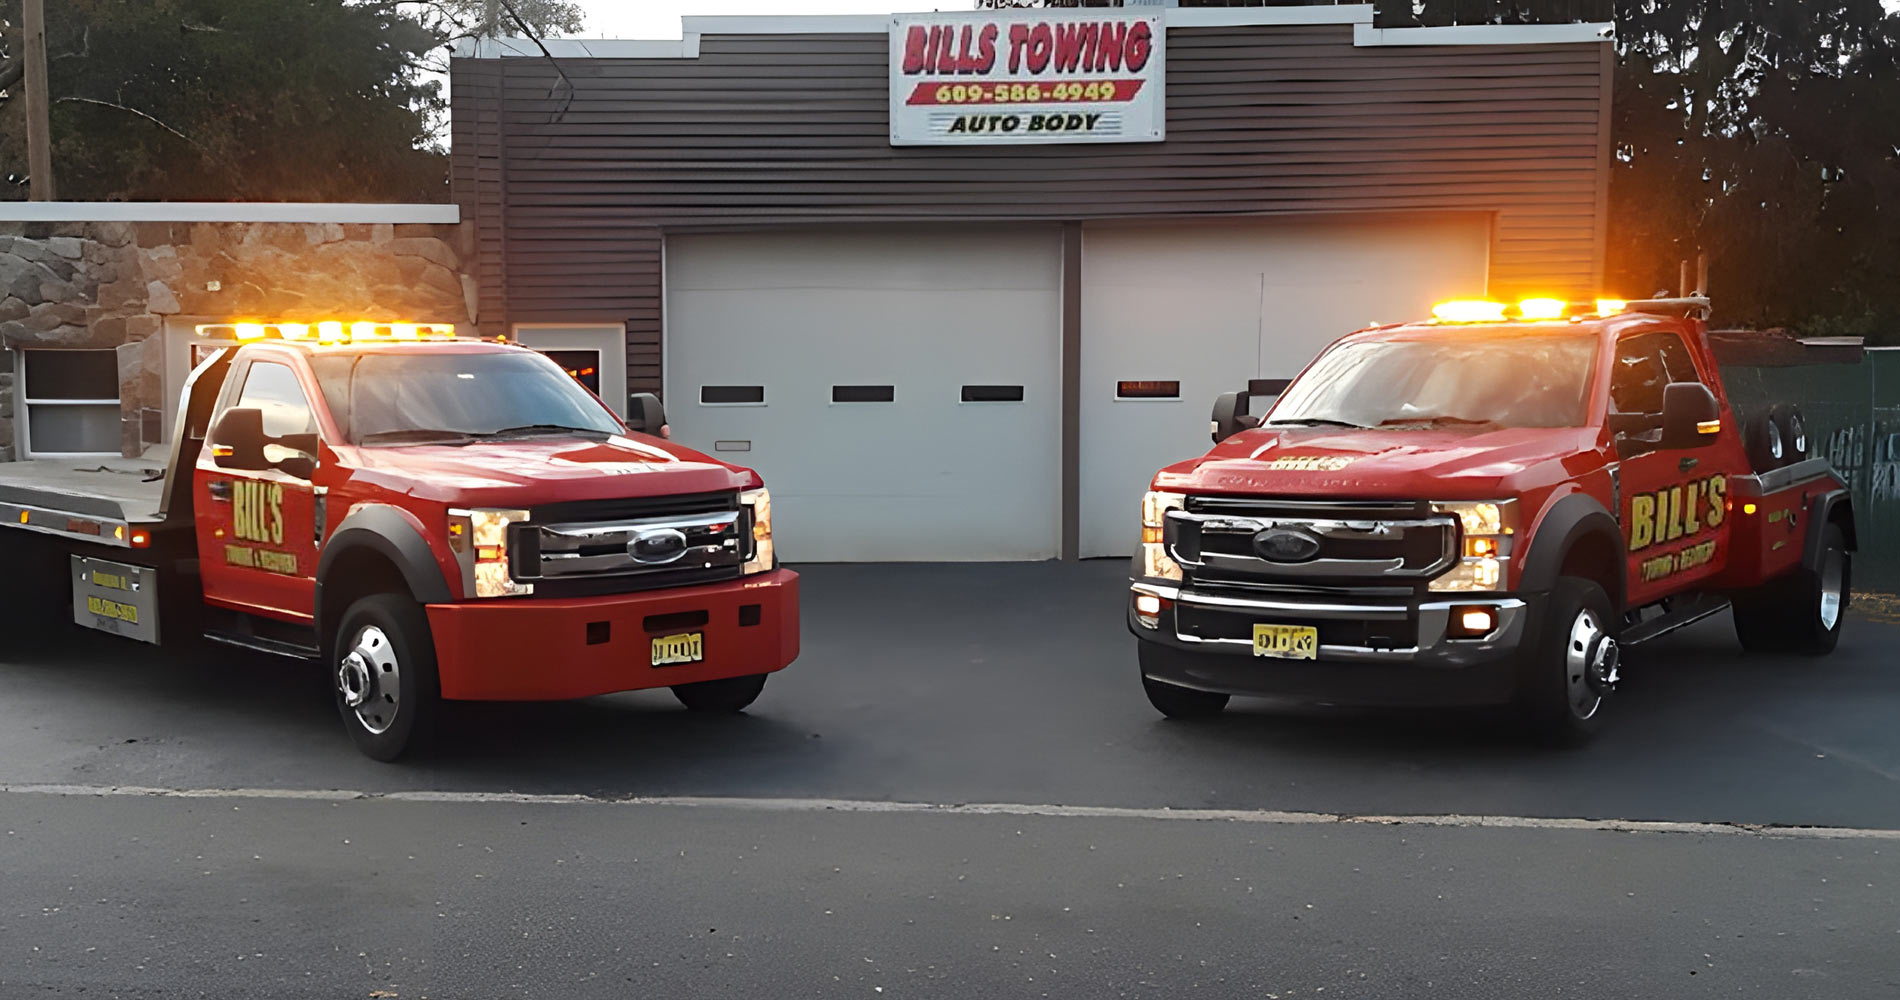 Bill's Towing | Robbinsville, NJ 08691